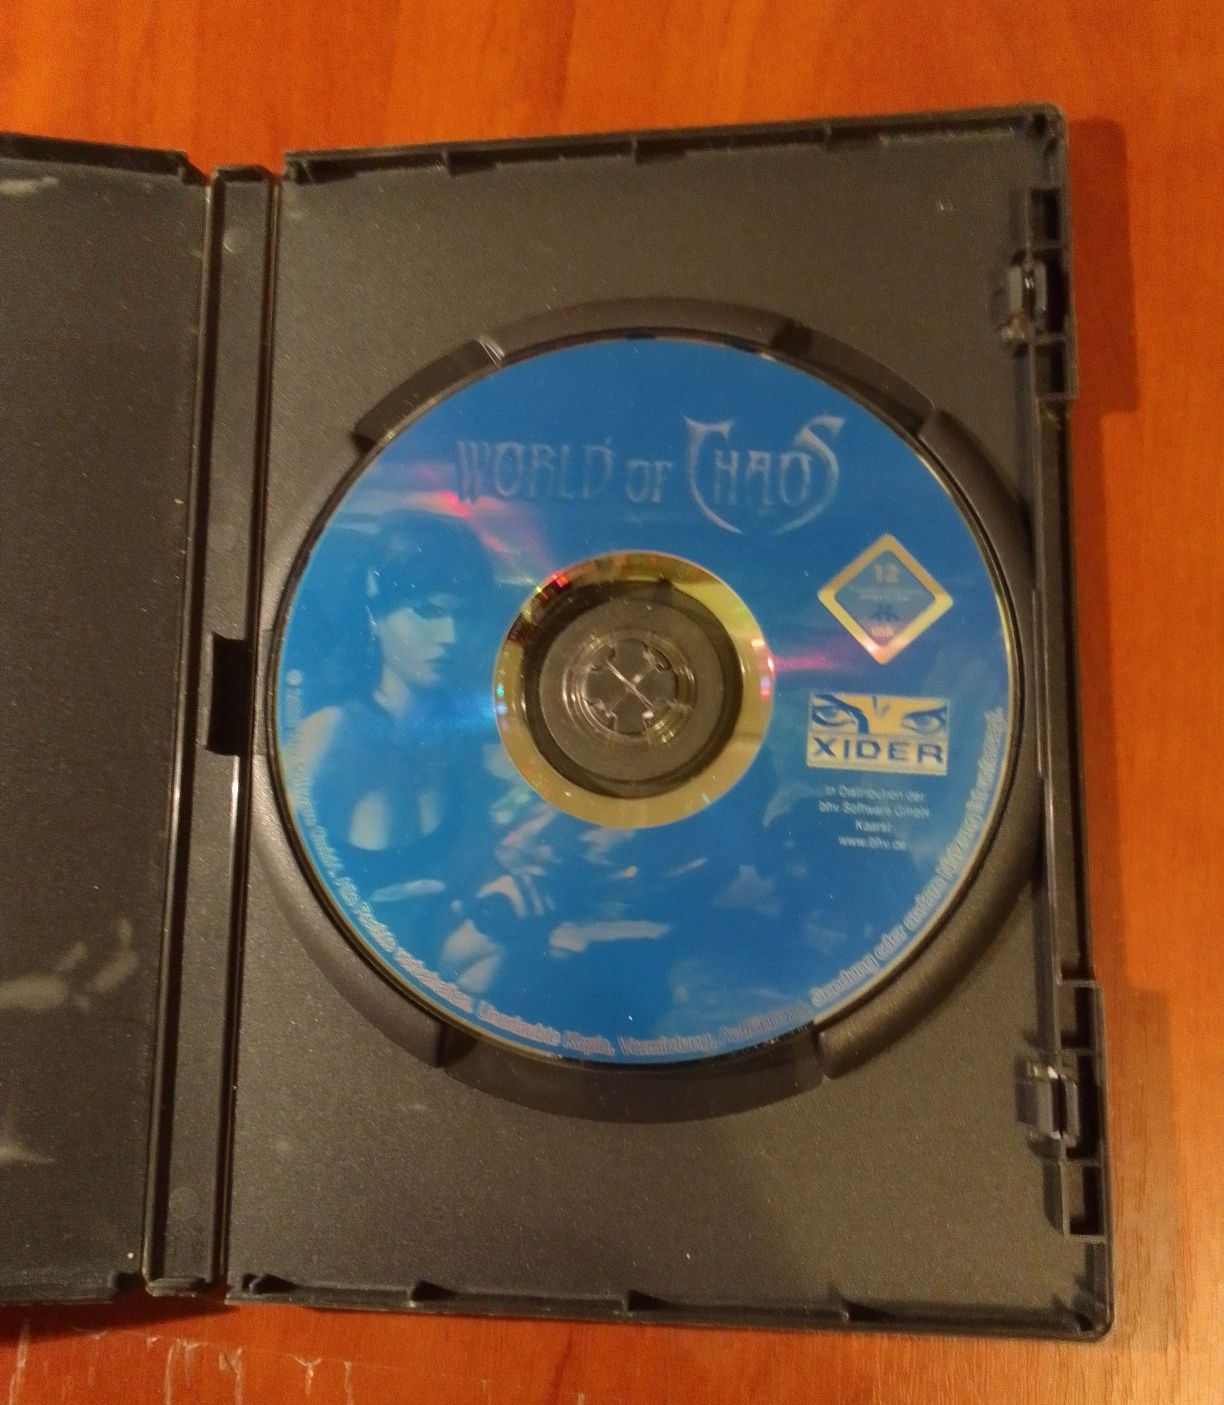 Gra World of chaos PC DVD-ROM